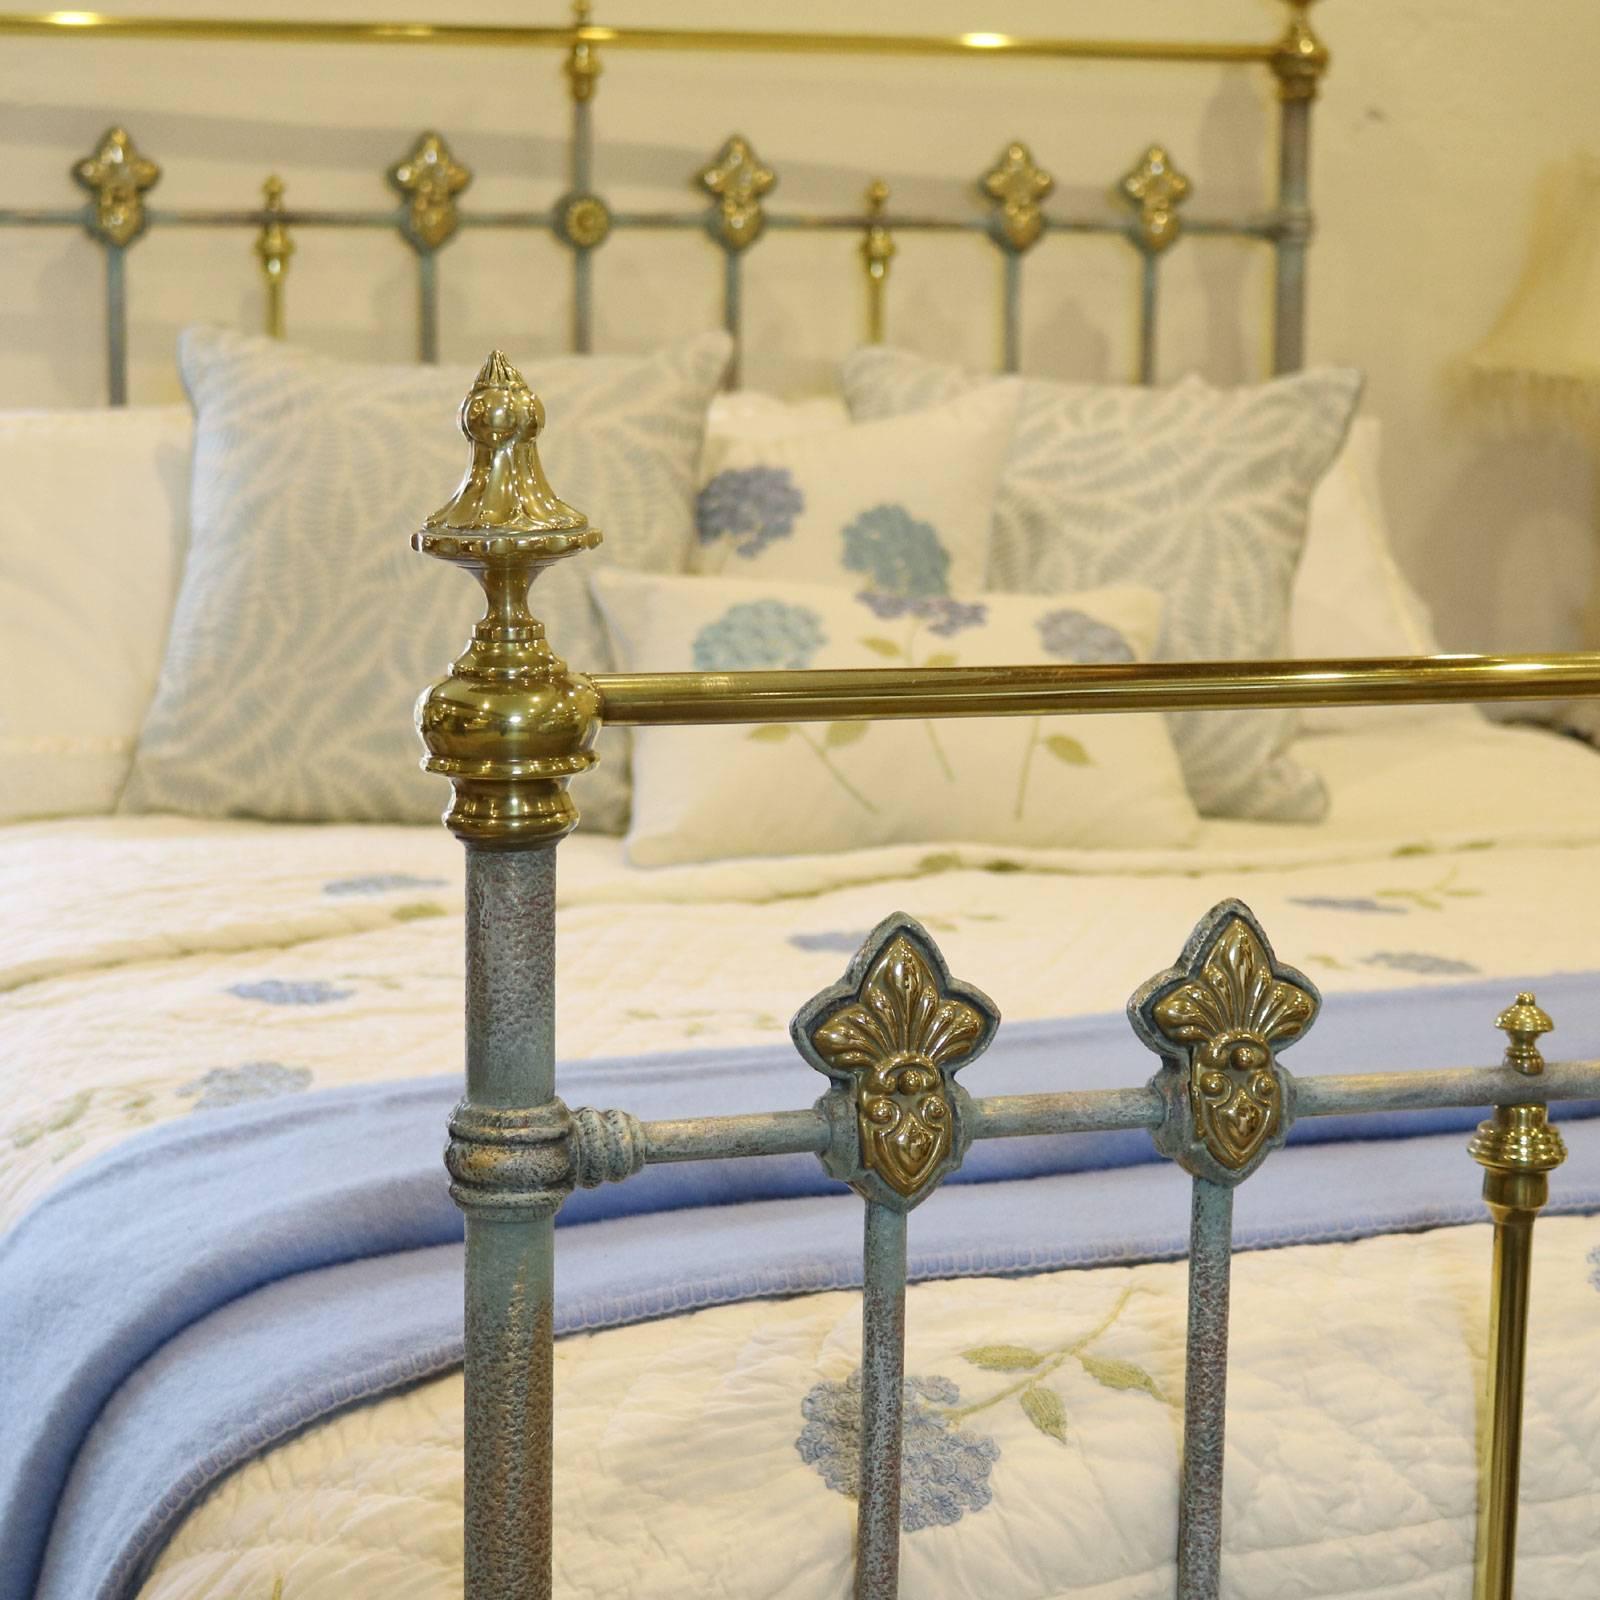 British Blue Verdigris Decorative Brass and Iron Bed